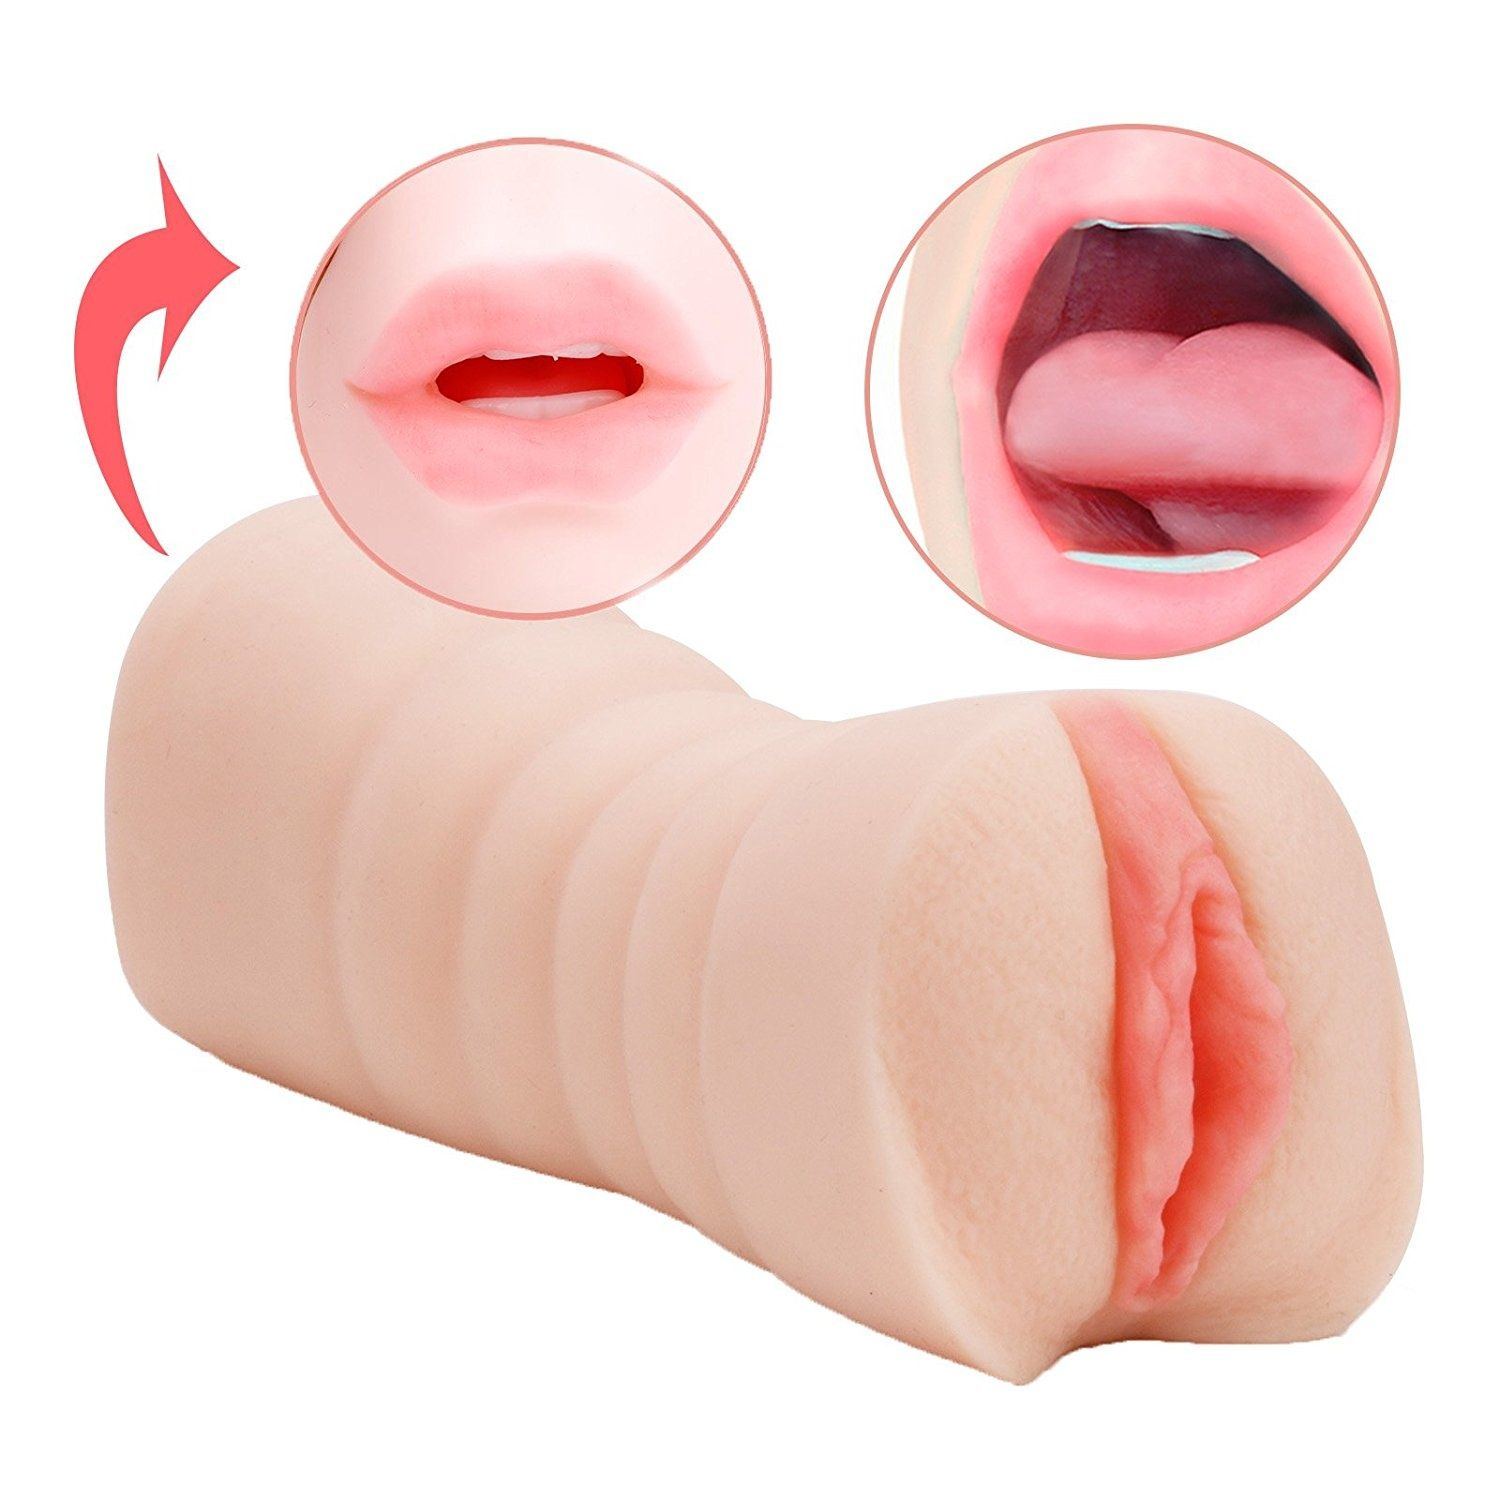 Newest australian male masturbation toy